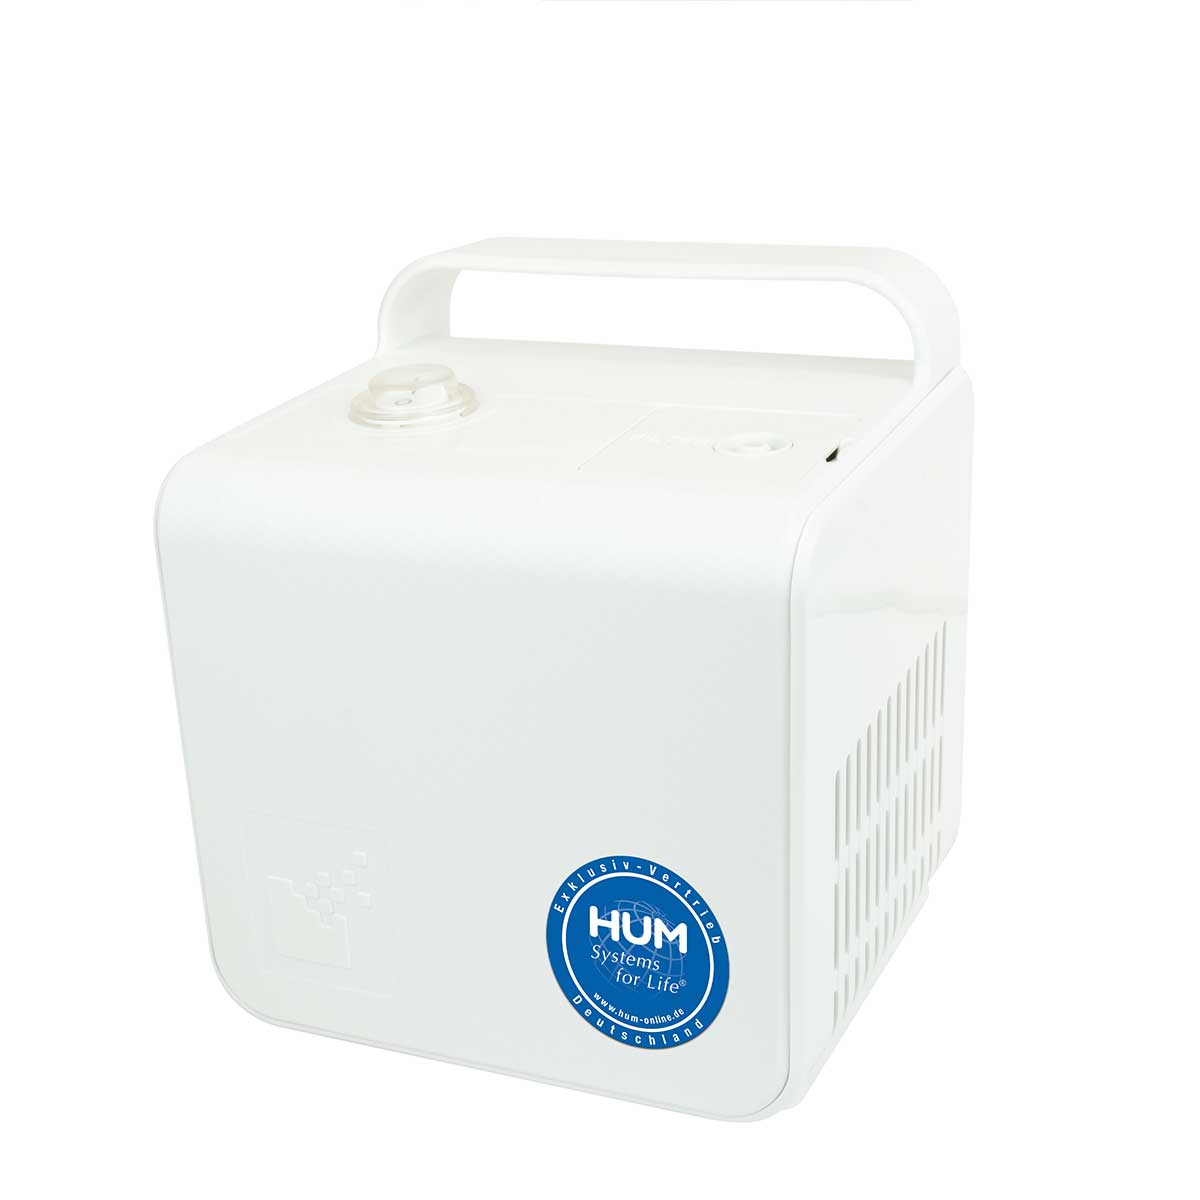 rezept-air-liquide-soffio-cube-inhalationsgerat-fur-dak-kunden-vidima